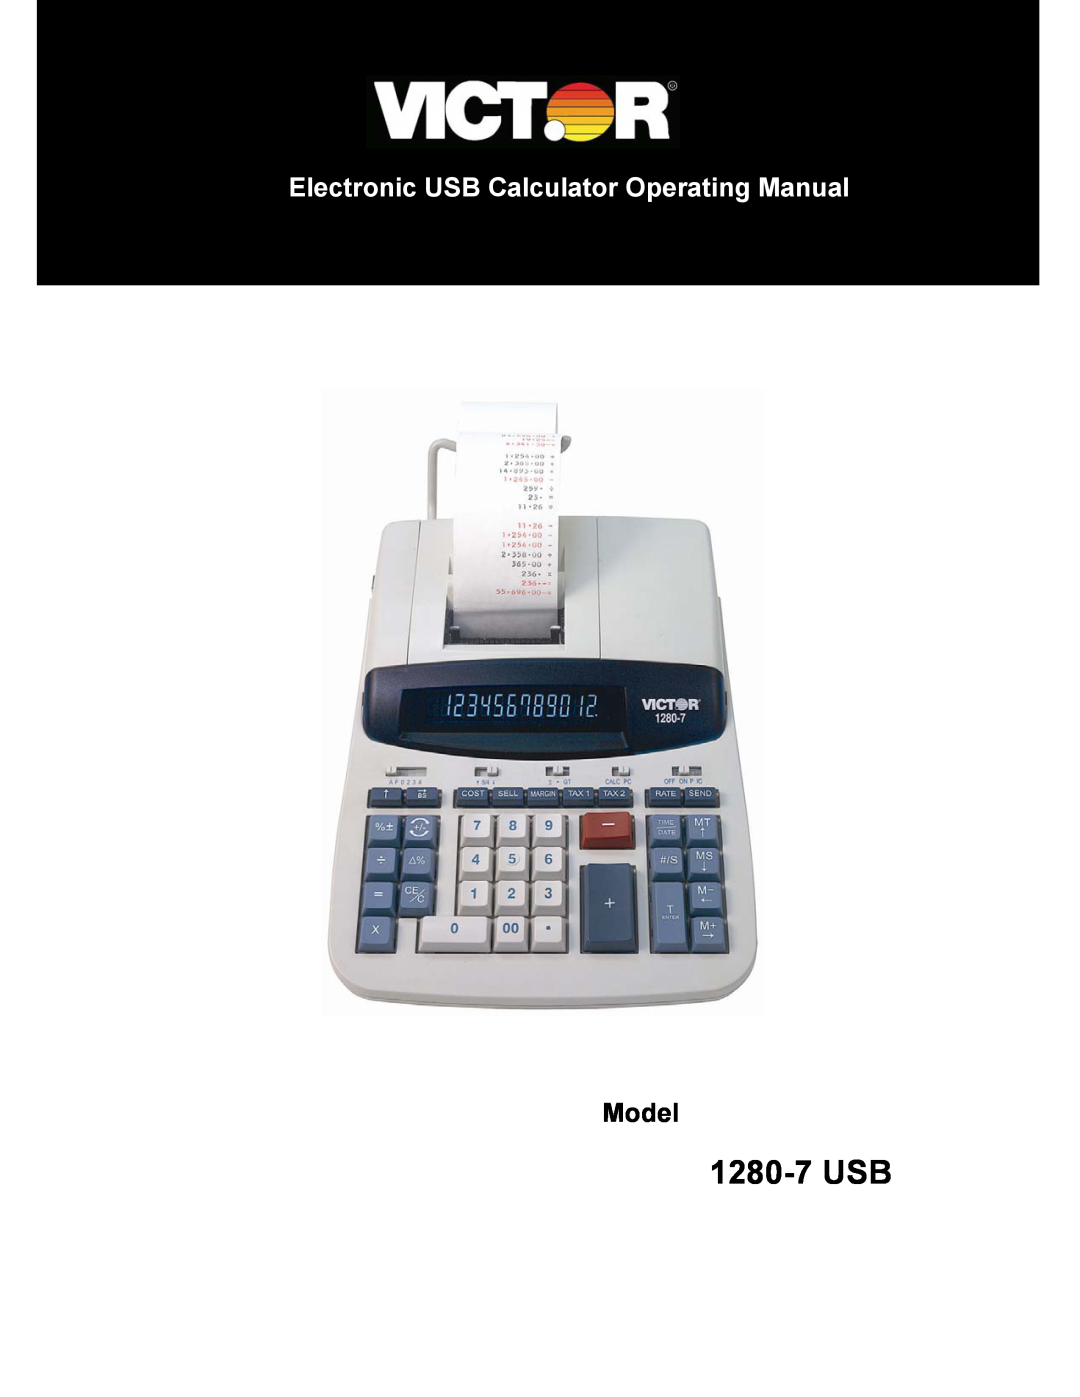 Victor 1280-7 USB manual Electronic USB Calculator Operating Manual, Model 